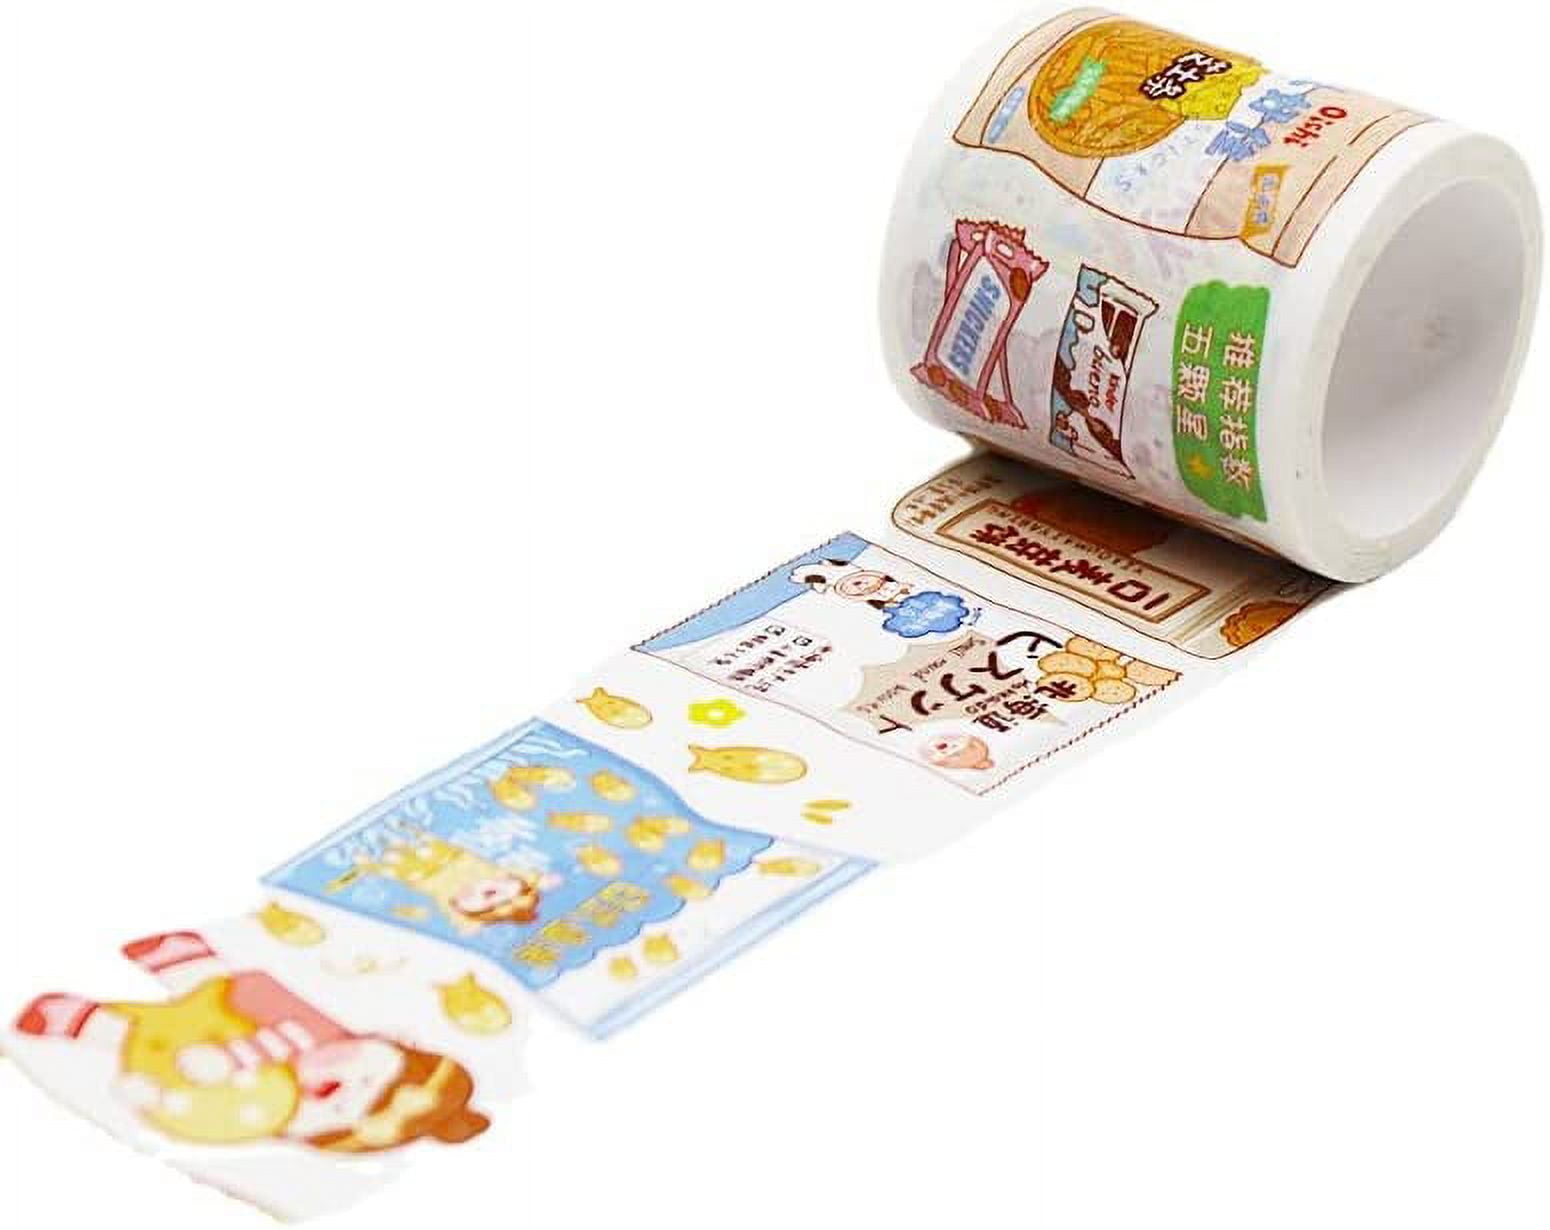 DanceeMangoos Kawaii Washi Tape Set - Cute Washi Paper Masking